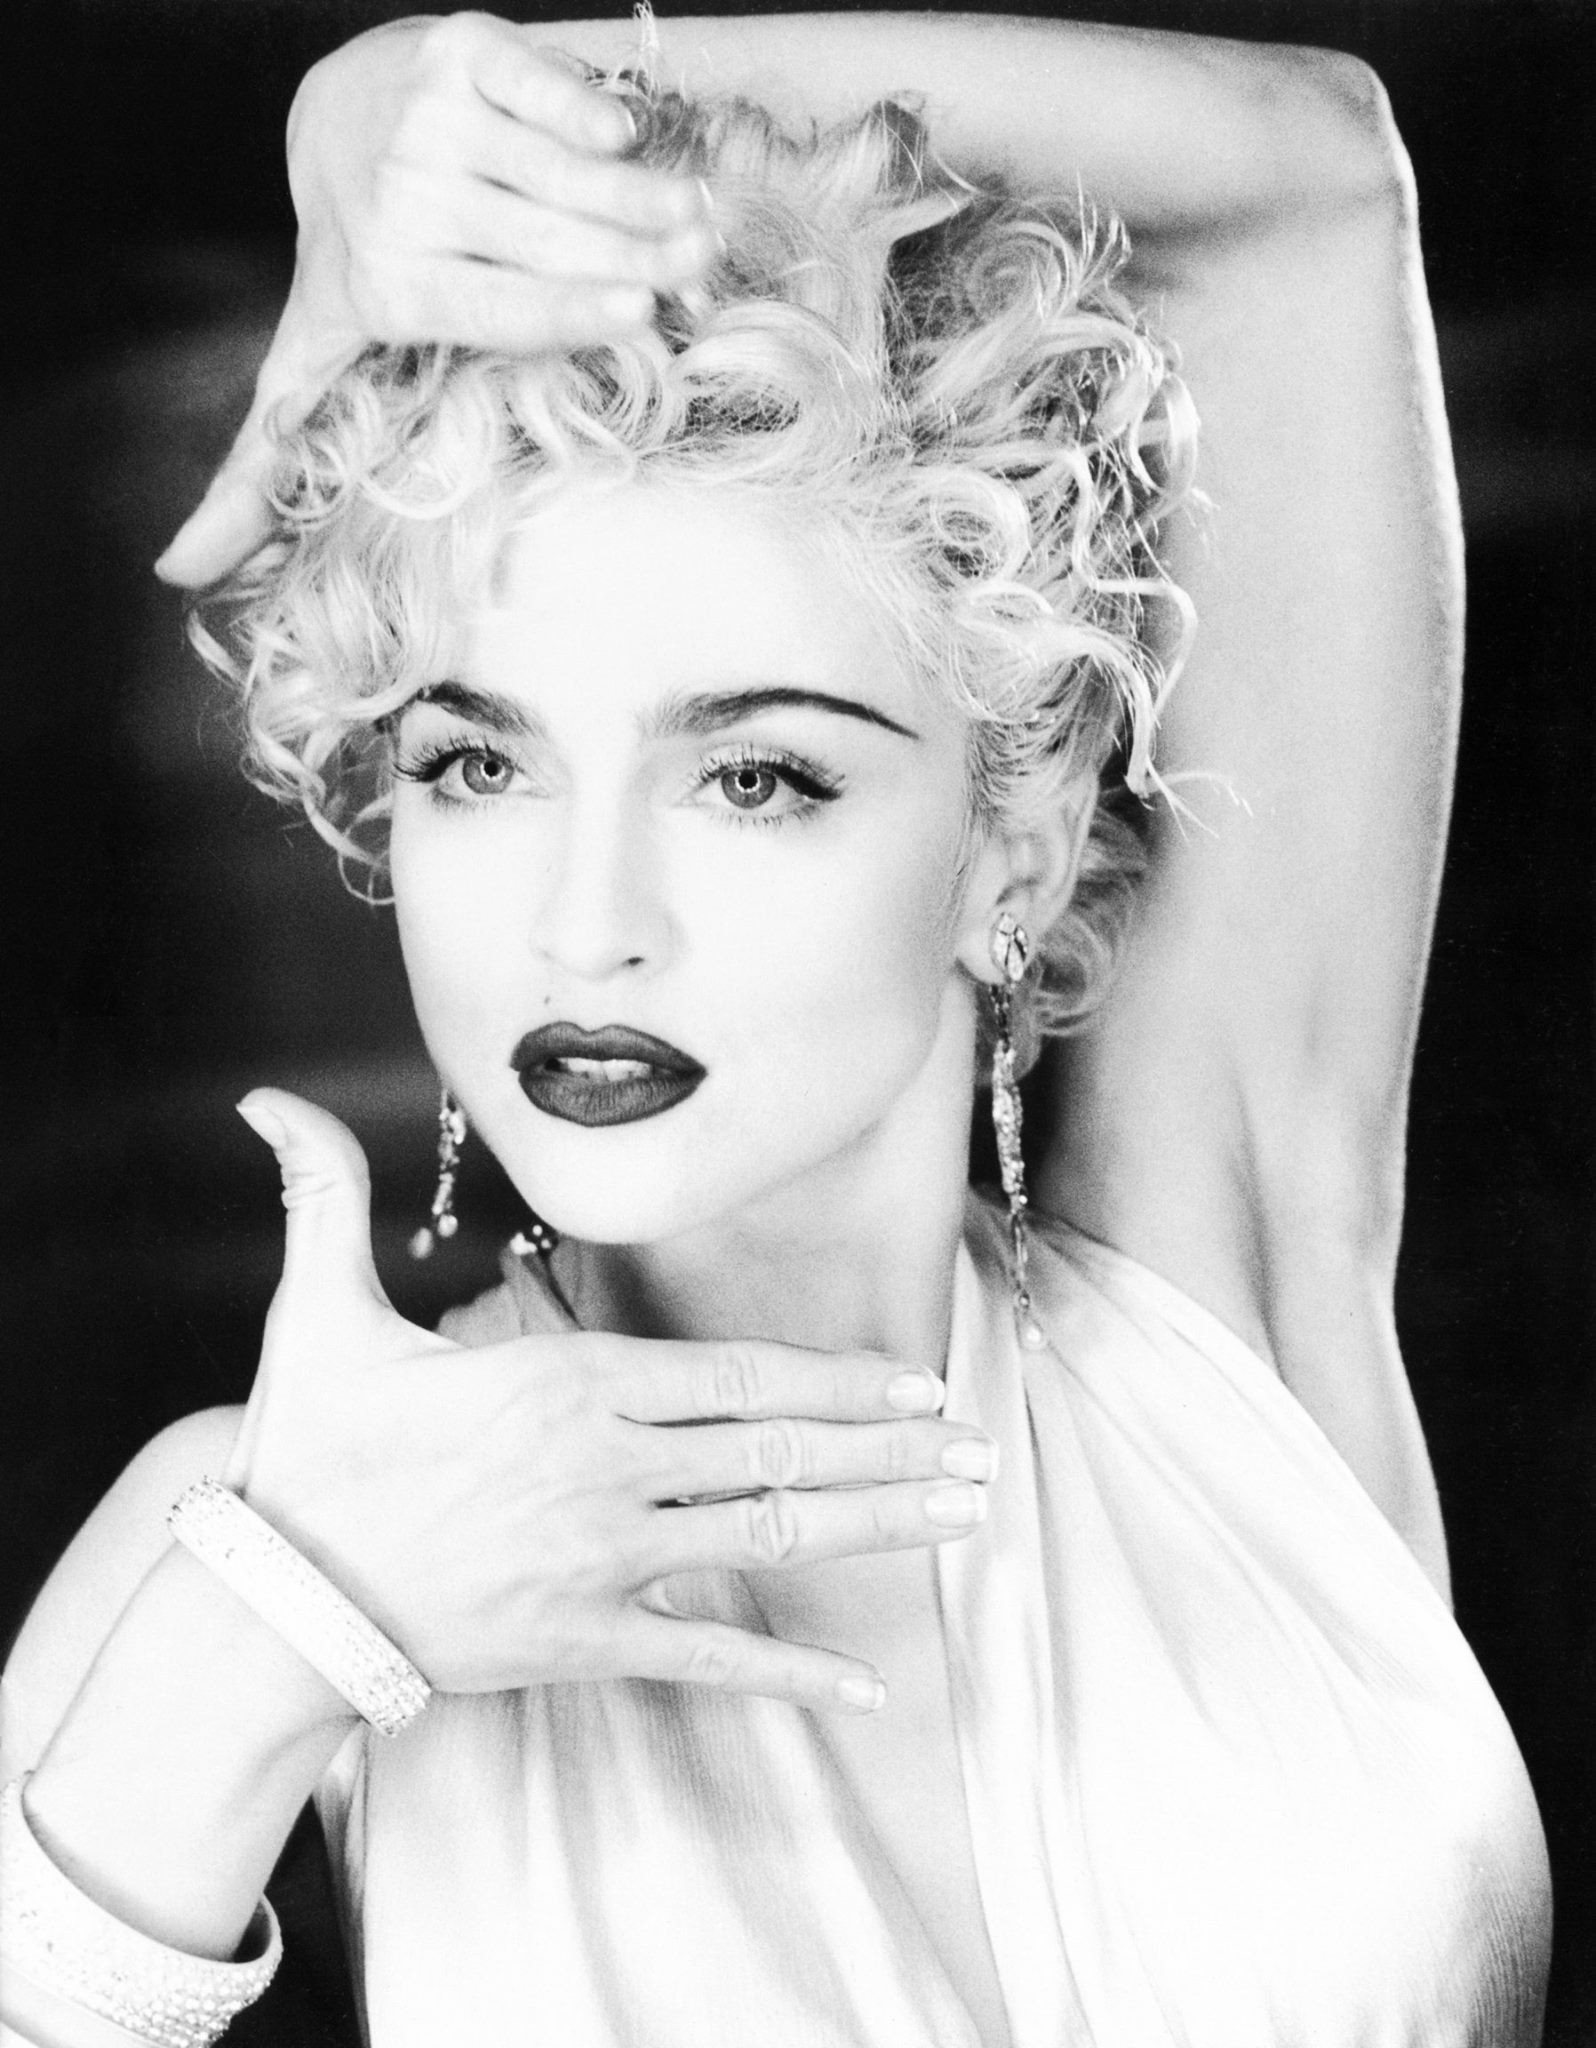 VERDICT: Hit-ul Madonnei „Vogue nu este plagiat!